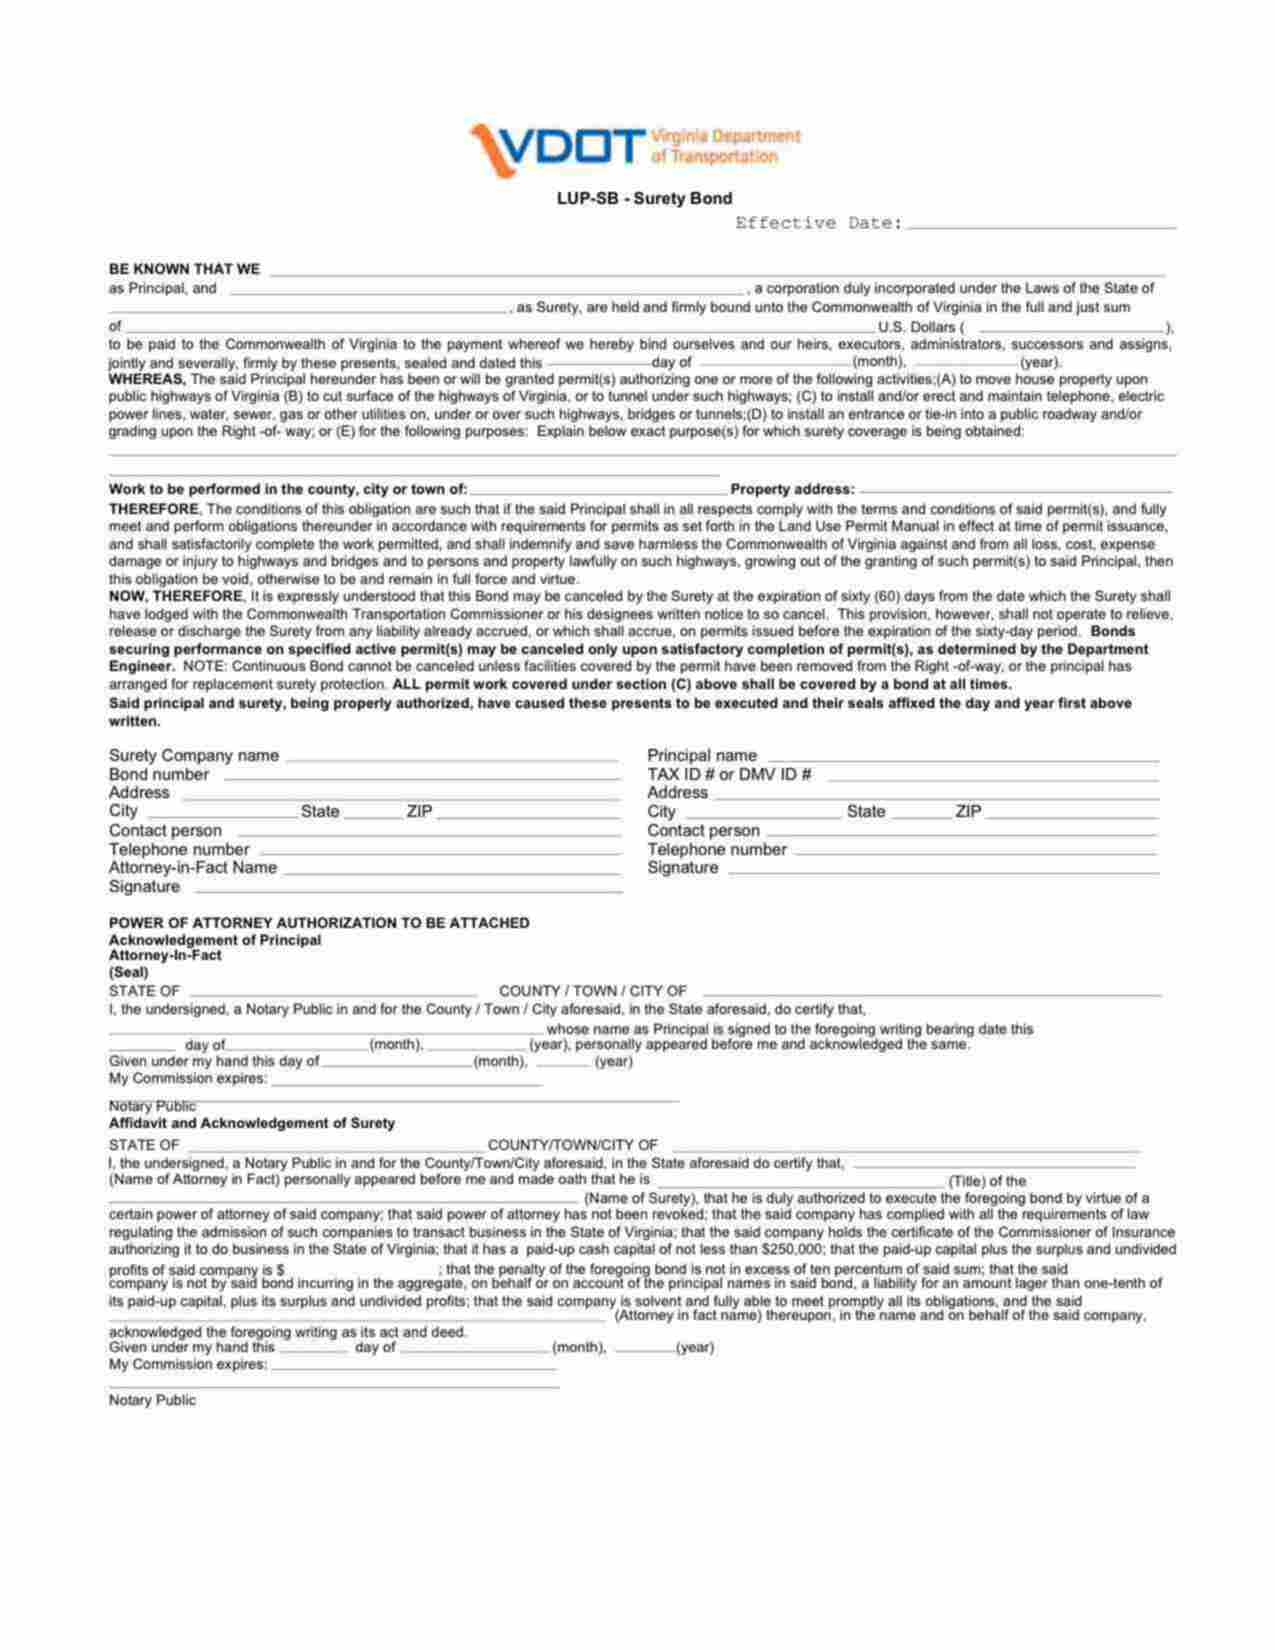 Virginia Land Use Permit: Type E Miscellaneous Bond Form